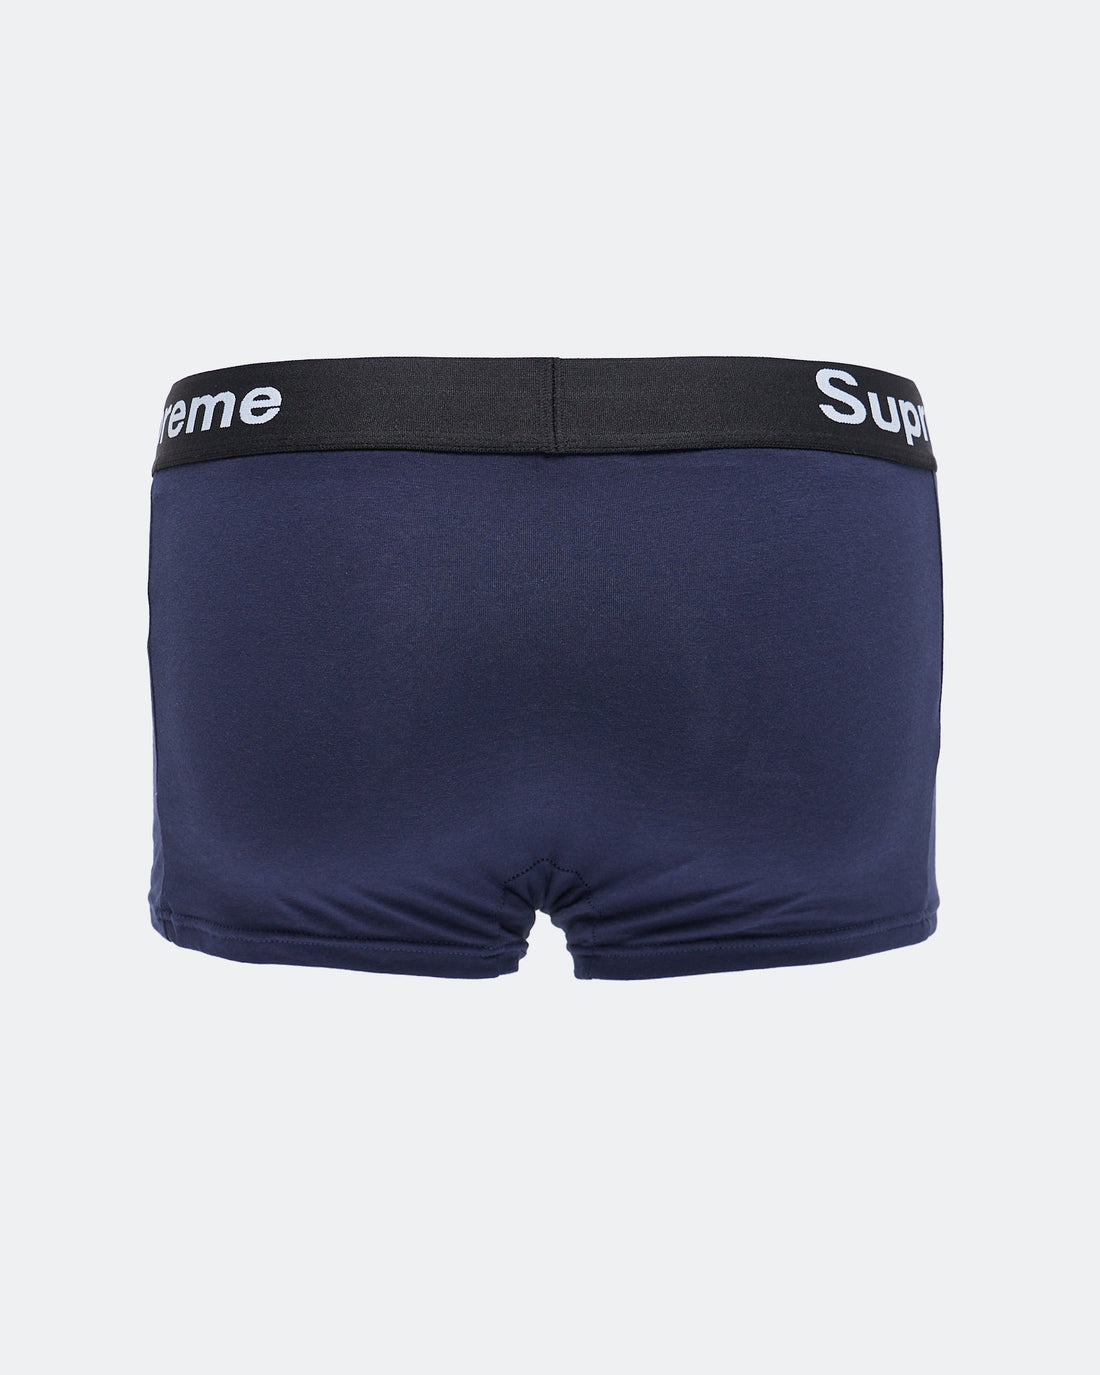 MOI OUTFIT-Sup Logo Printed Men Underwear 6.50